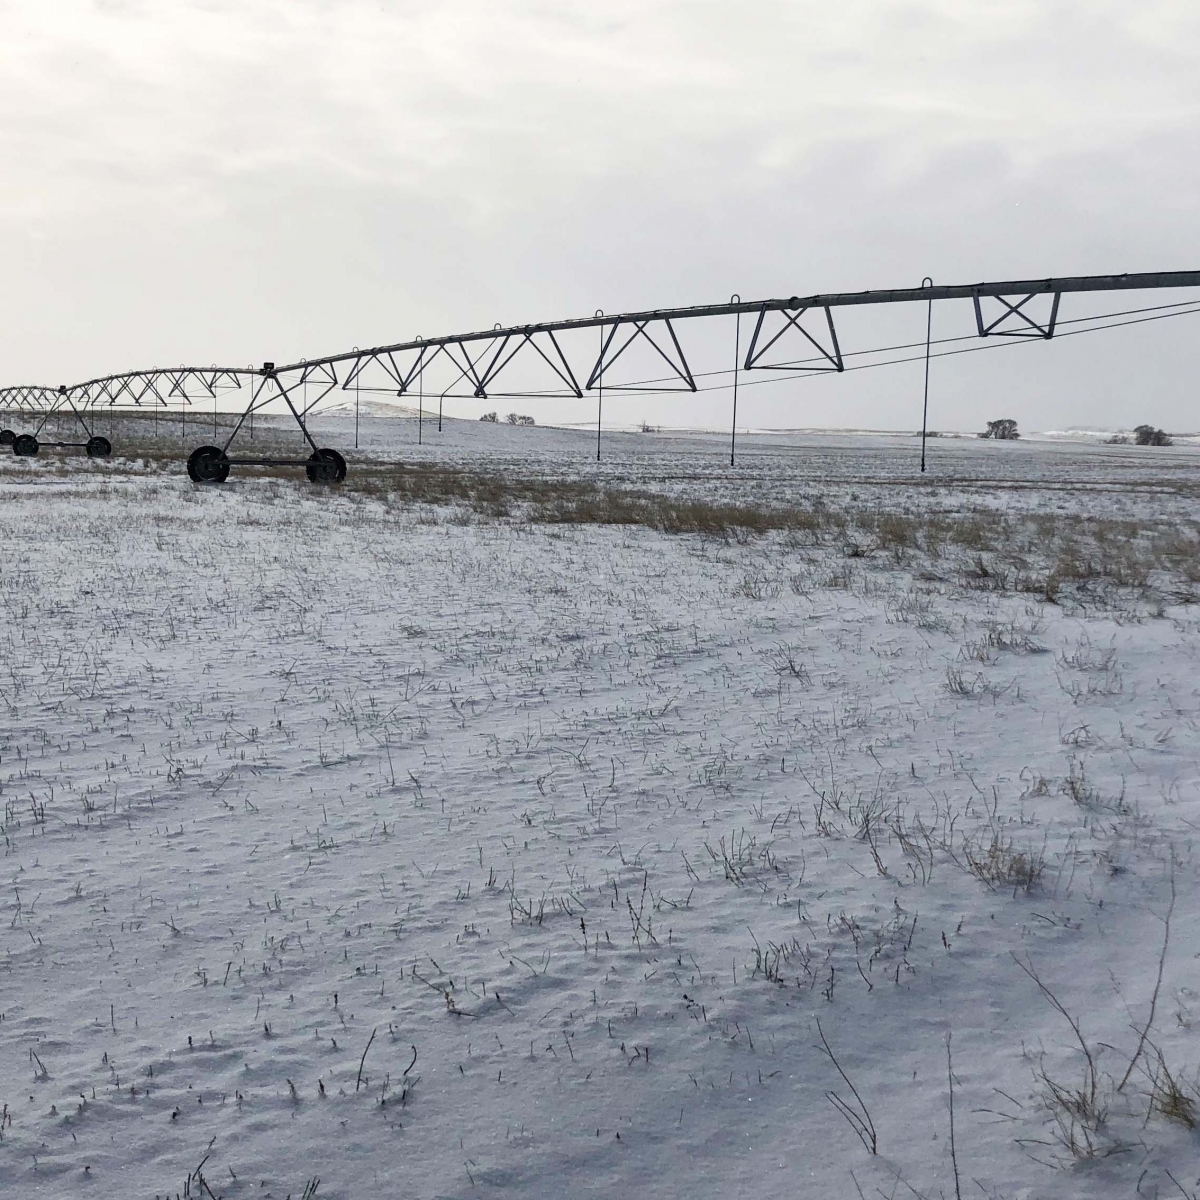 Irrigation system in snowy field 